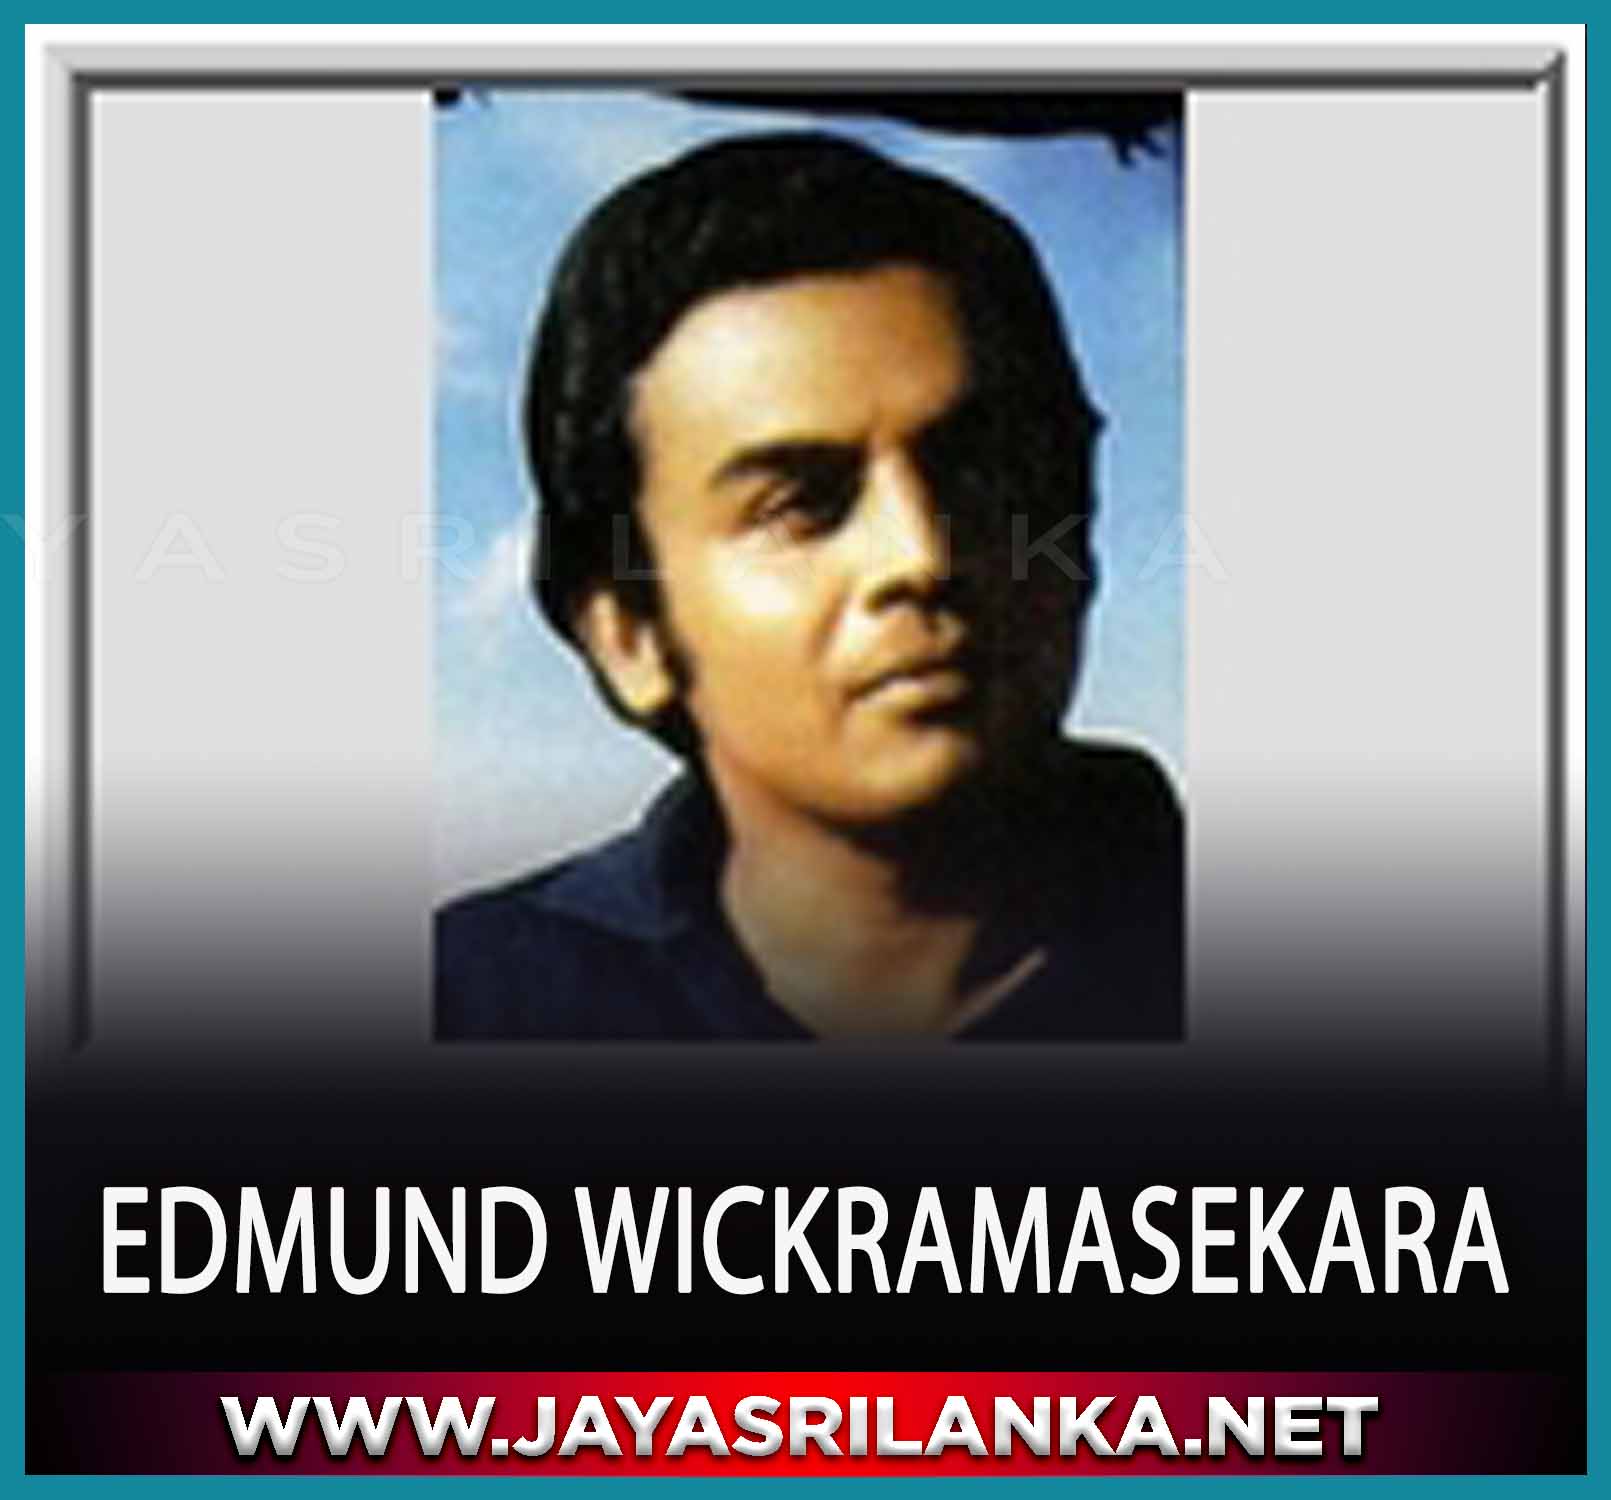 Lanka Sundara Lanka - Edmund Wickramasekara And Latha Walpola mp3 Image